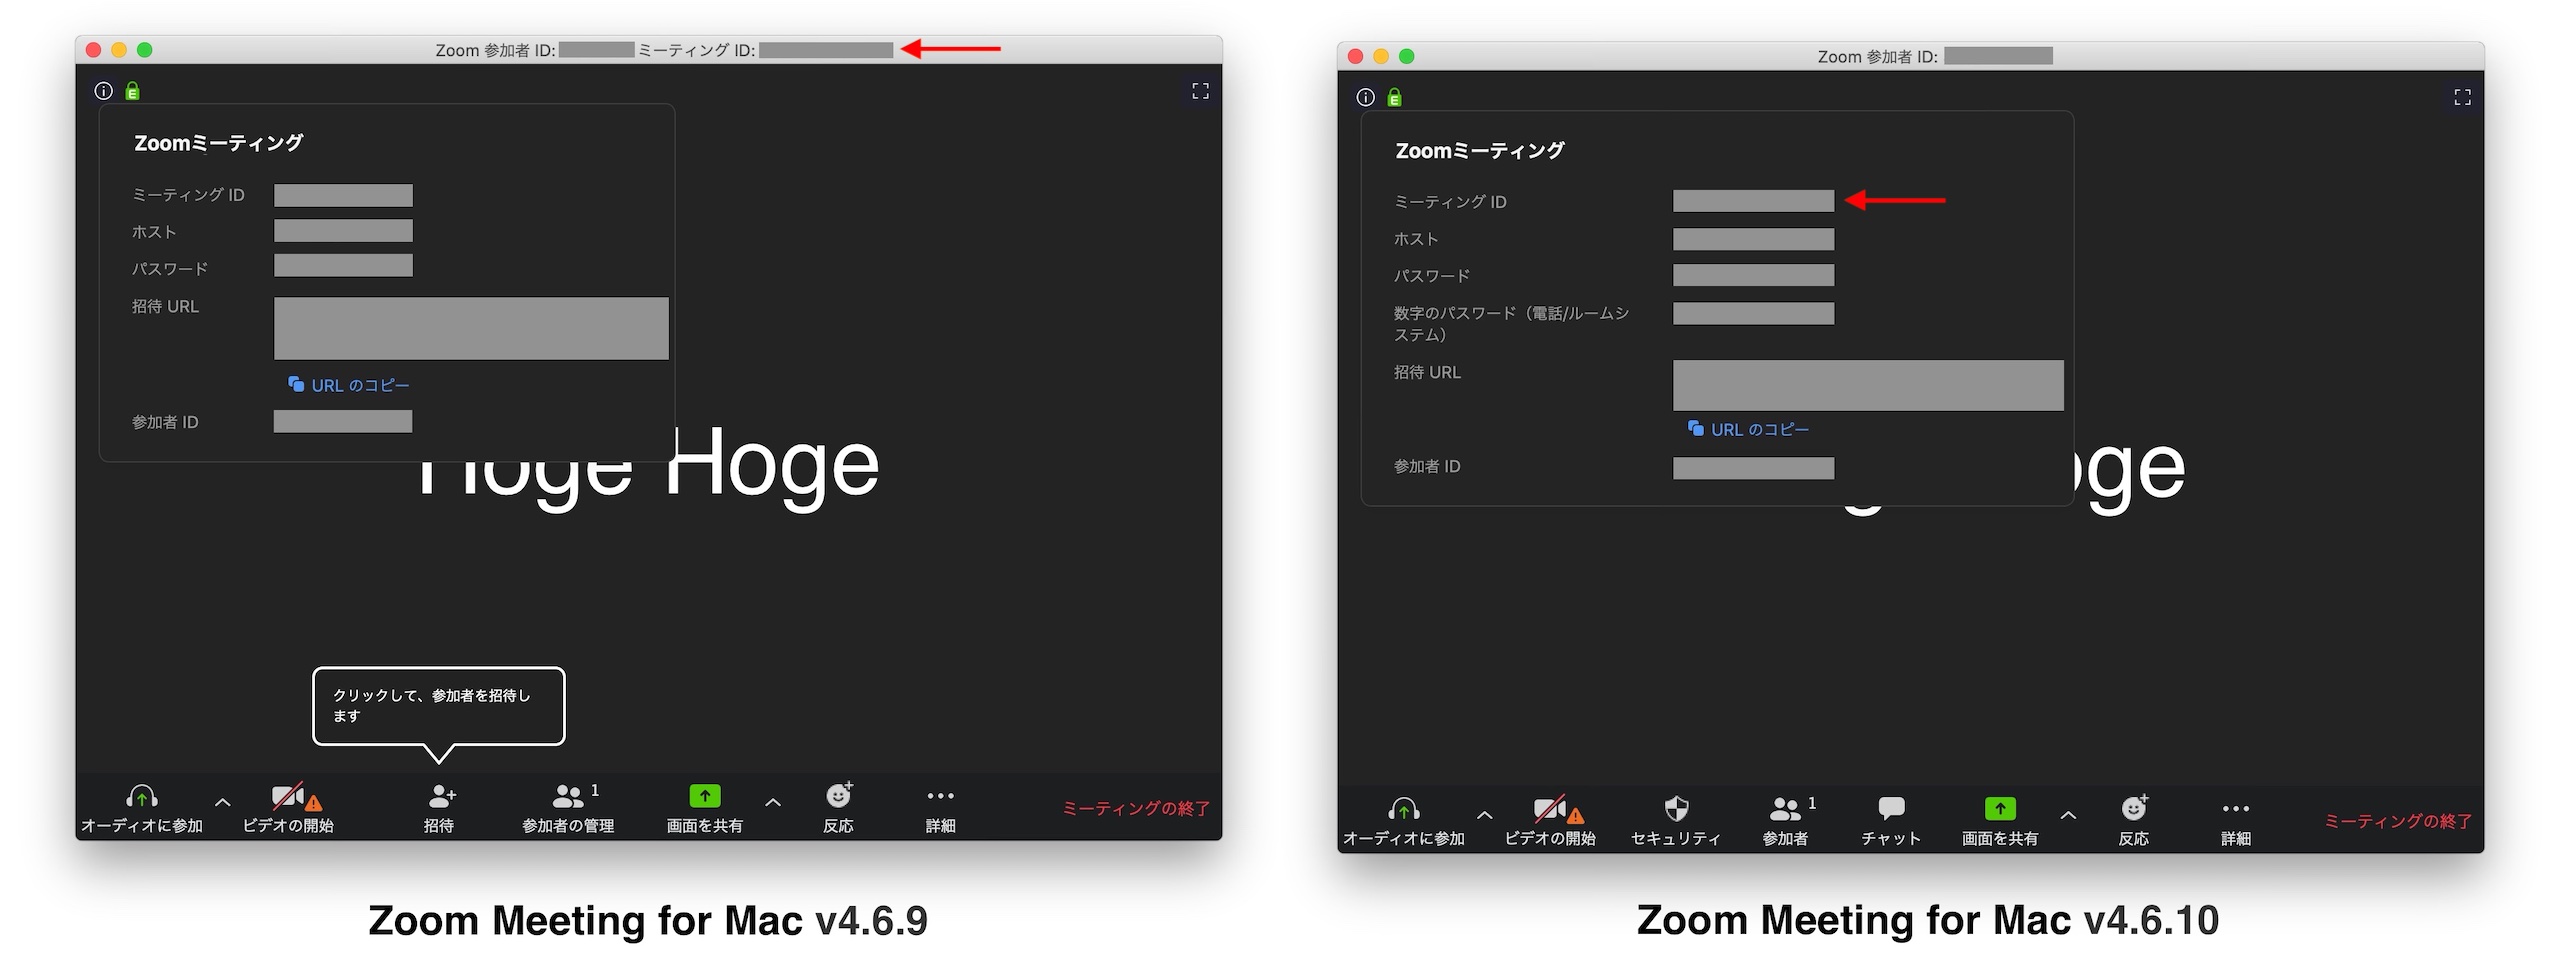 Zoom Meeting v4.6.10